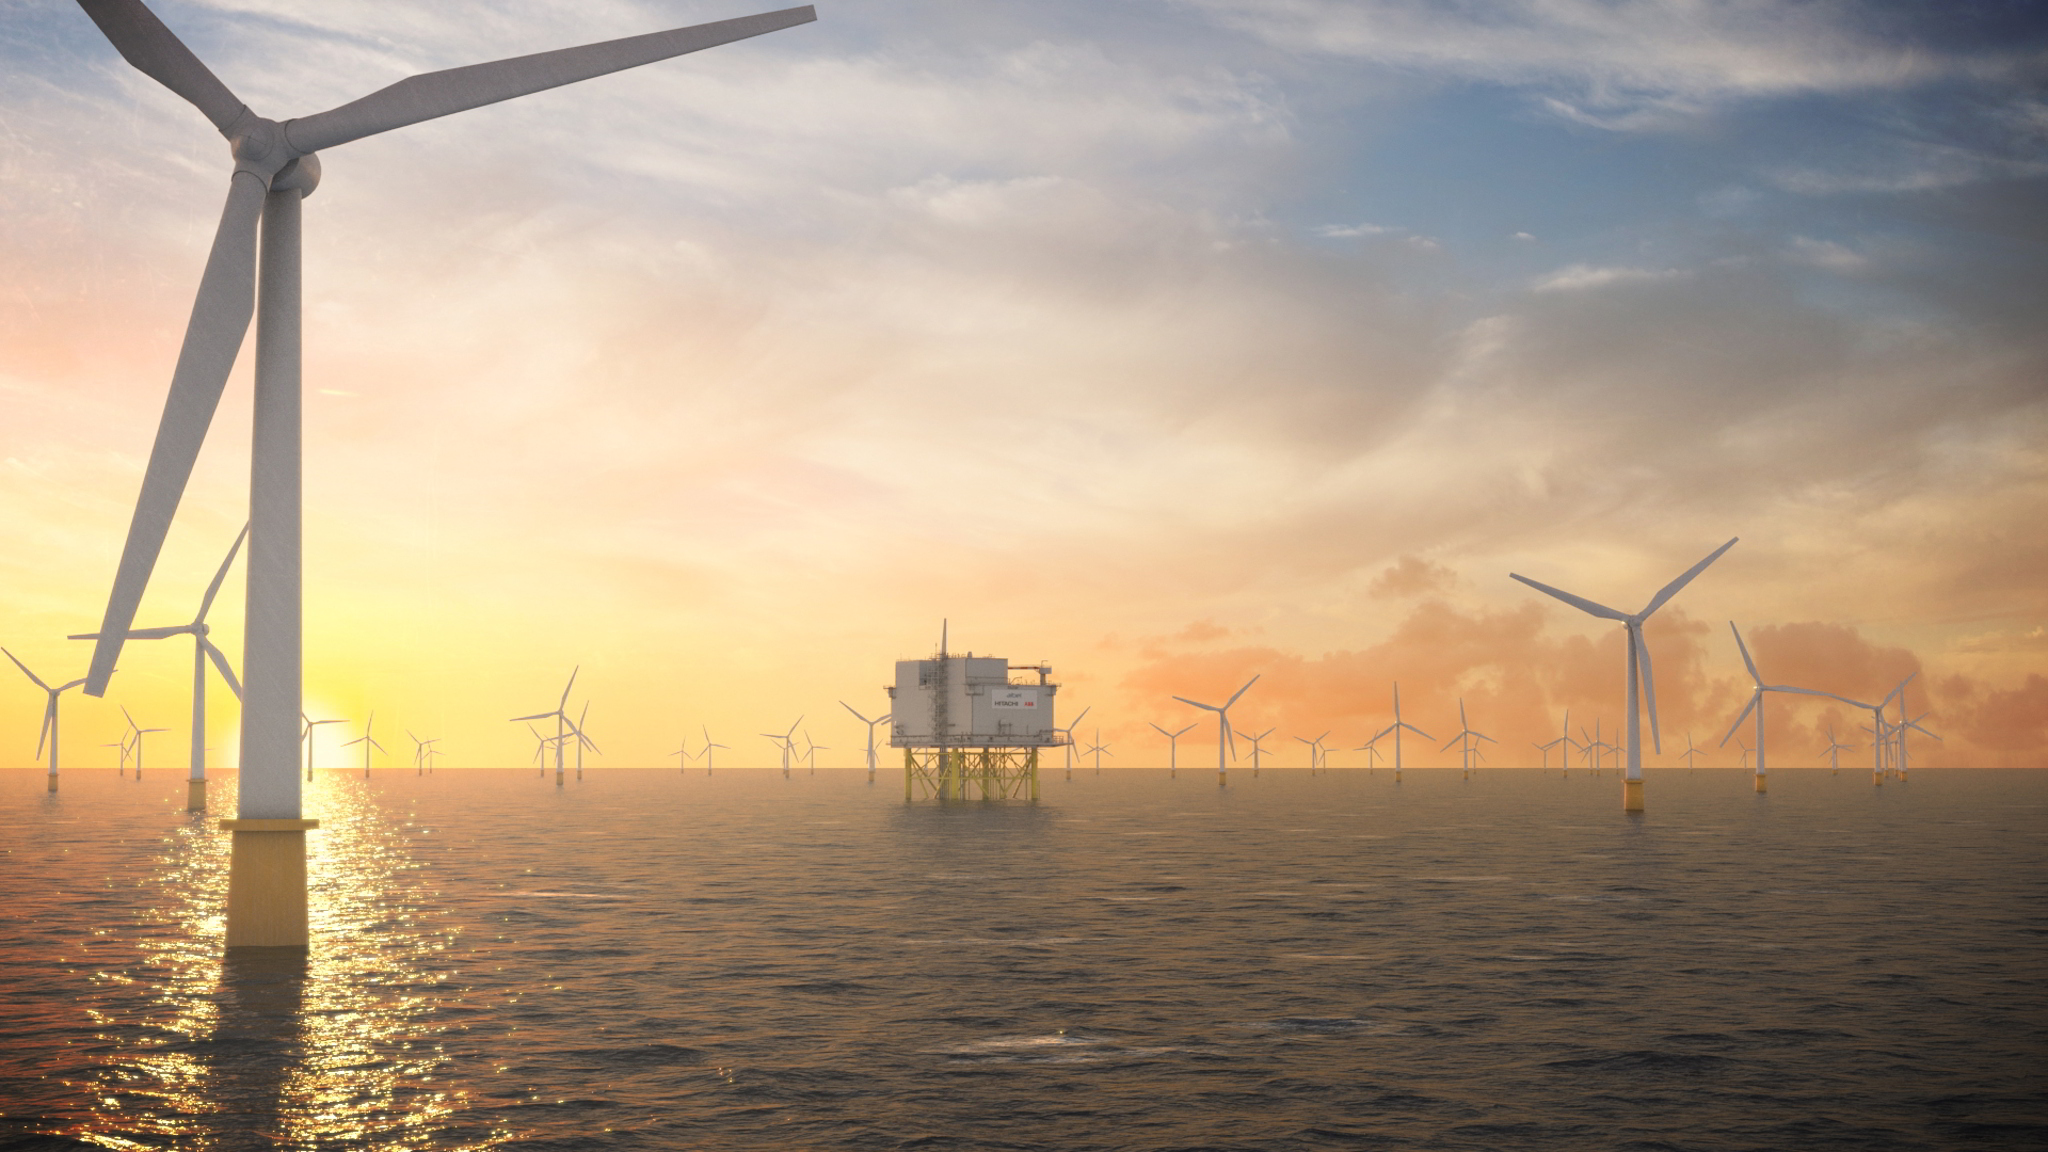 Artistic illustration of Aibel offshore platform in offshore wind farm